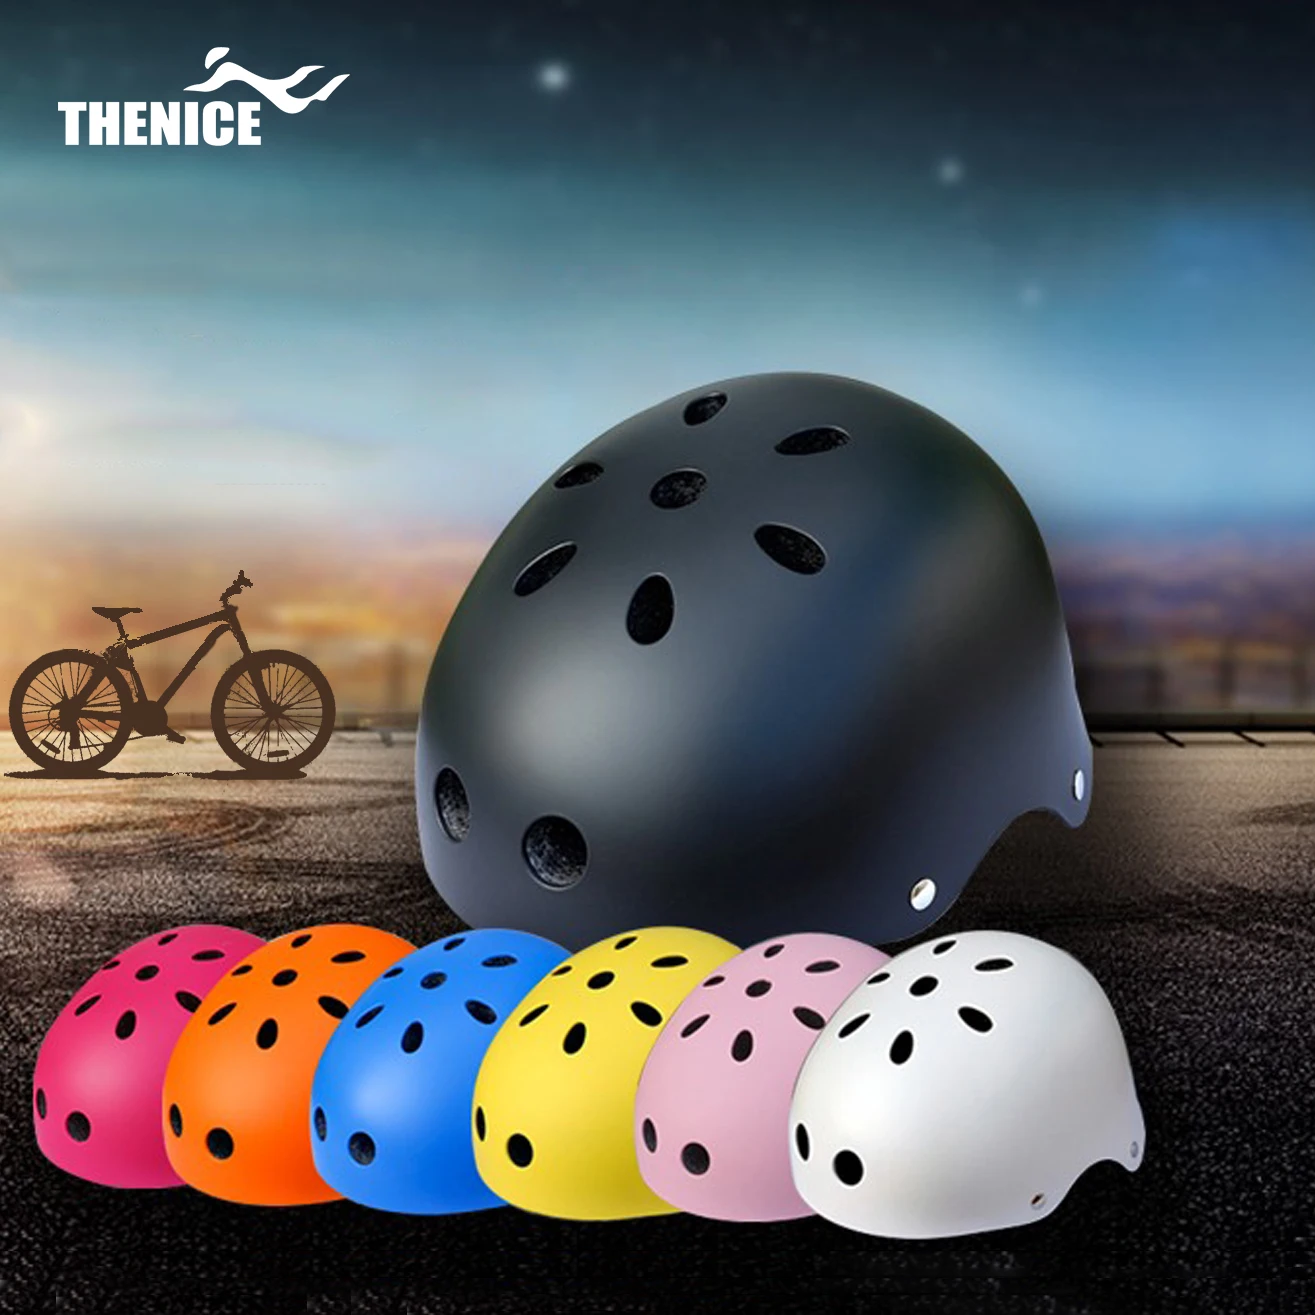 

Extreme Sports Helmet, Outdoor Skateboard Skating Dot Helmets - Scooter Riding Bike Helmets For Kids, Youth, Black,orange,blue,yellow,pink,white